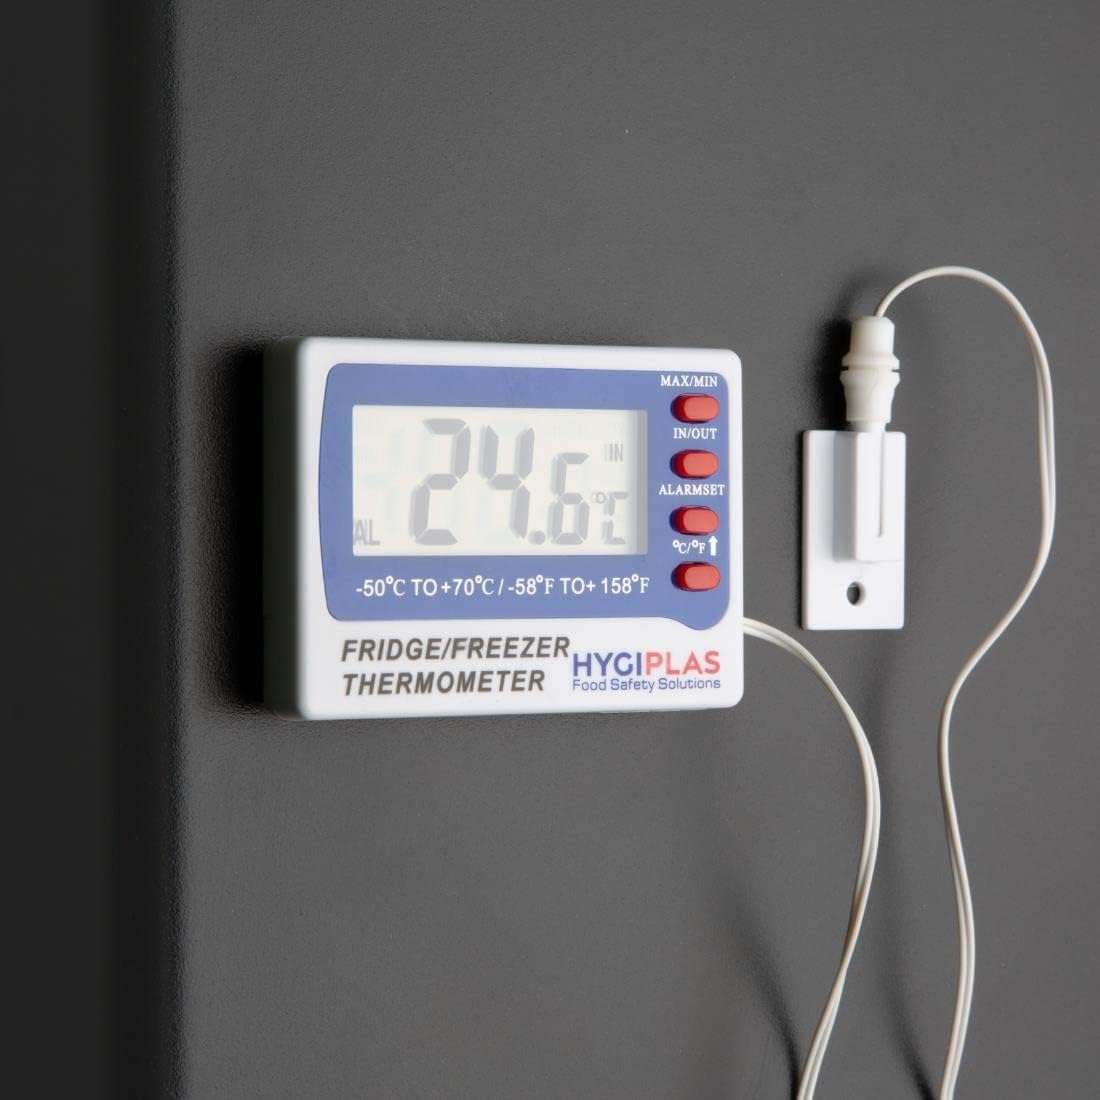 Hygiplas Digital Fridge / Freezer Thermometer Review